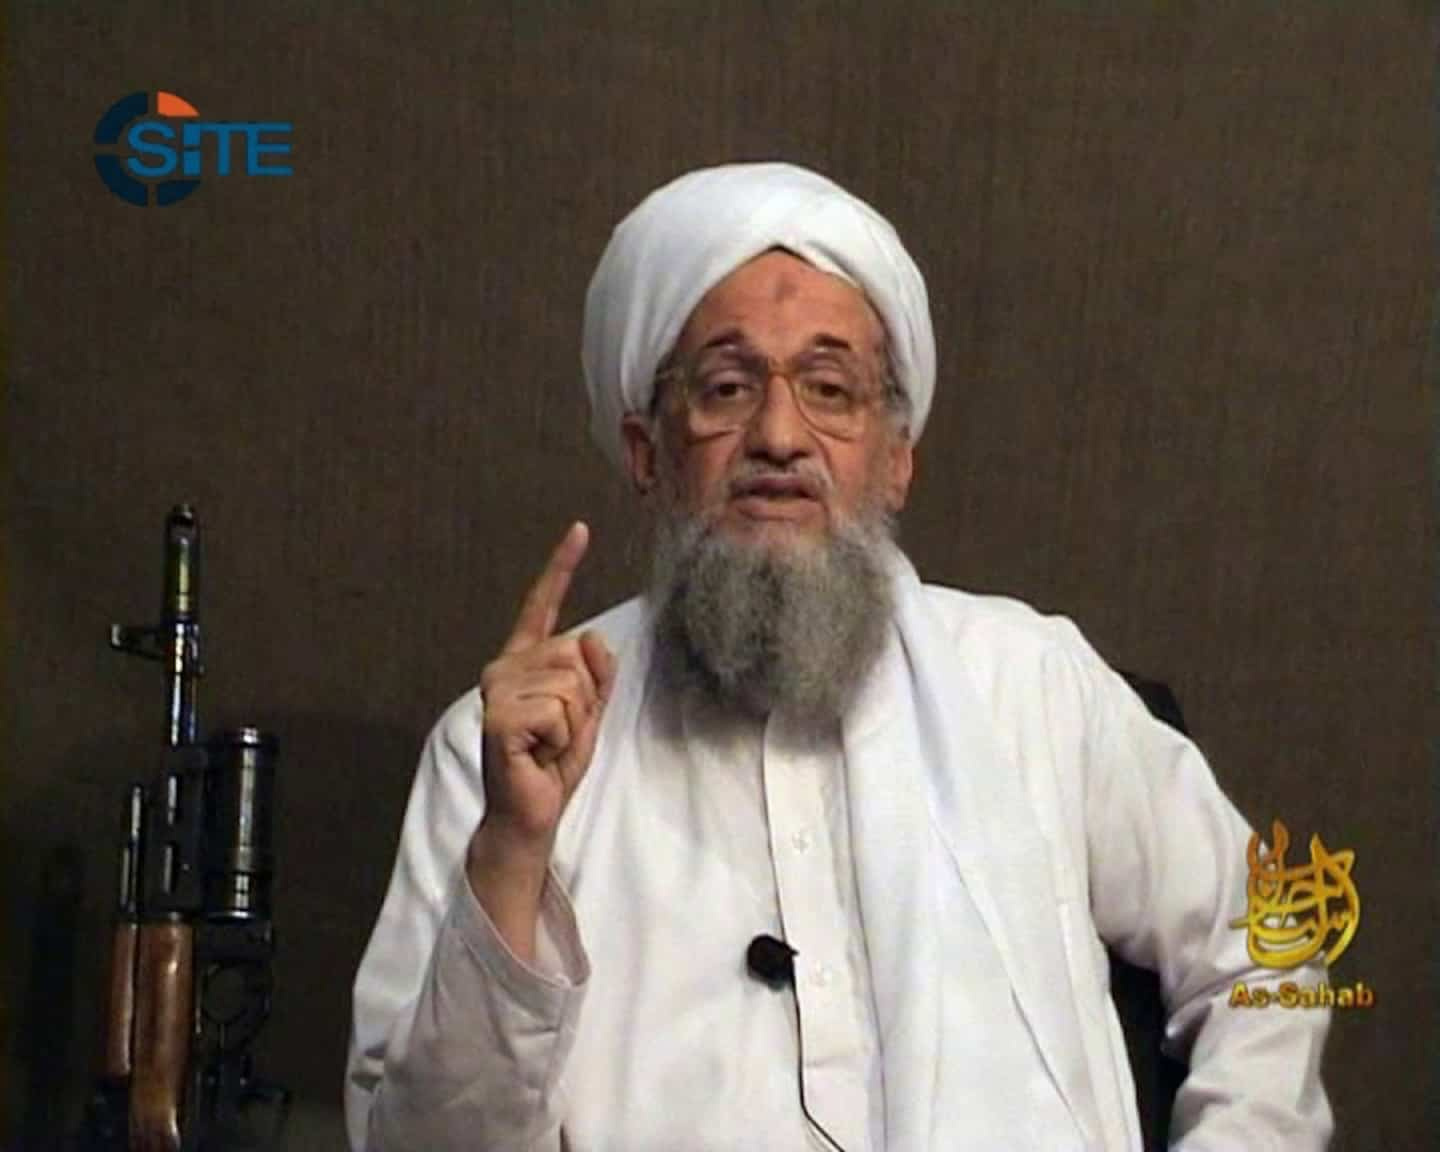 Biden reportedly examined model of Zawahiri's house before attack